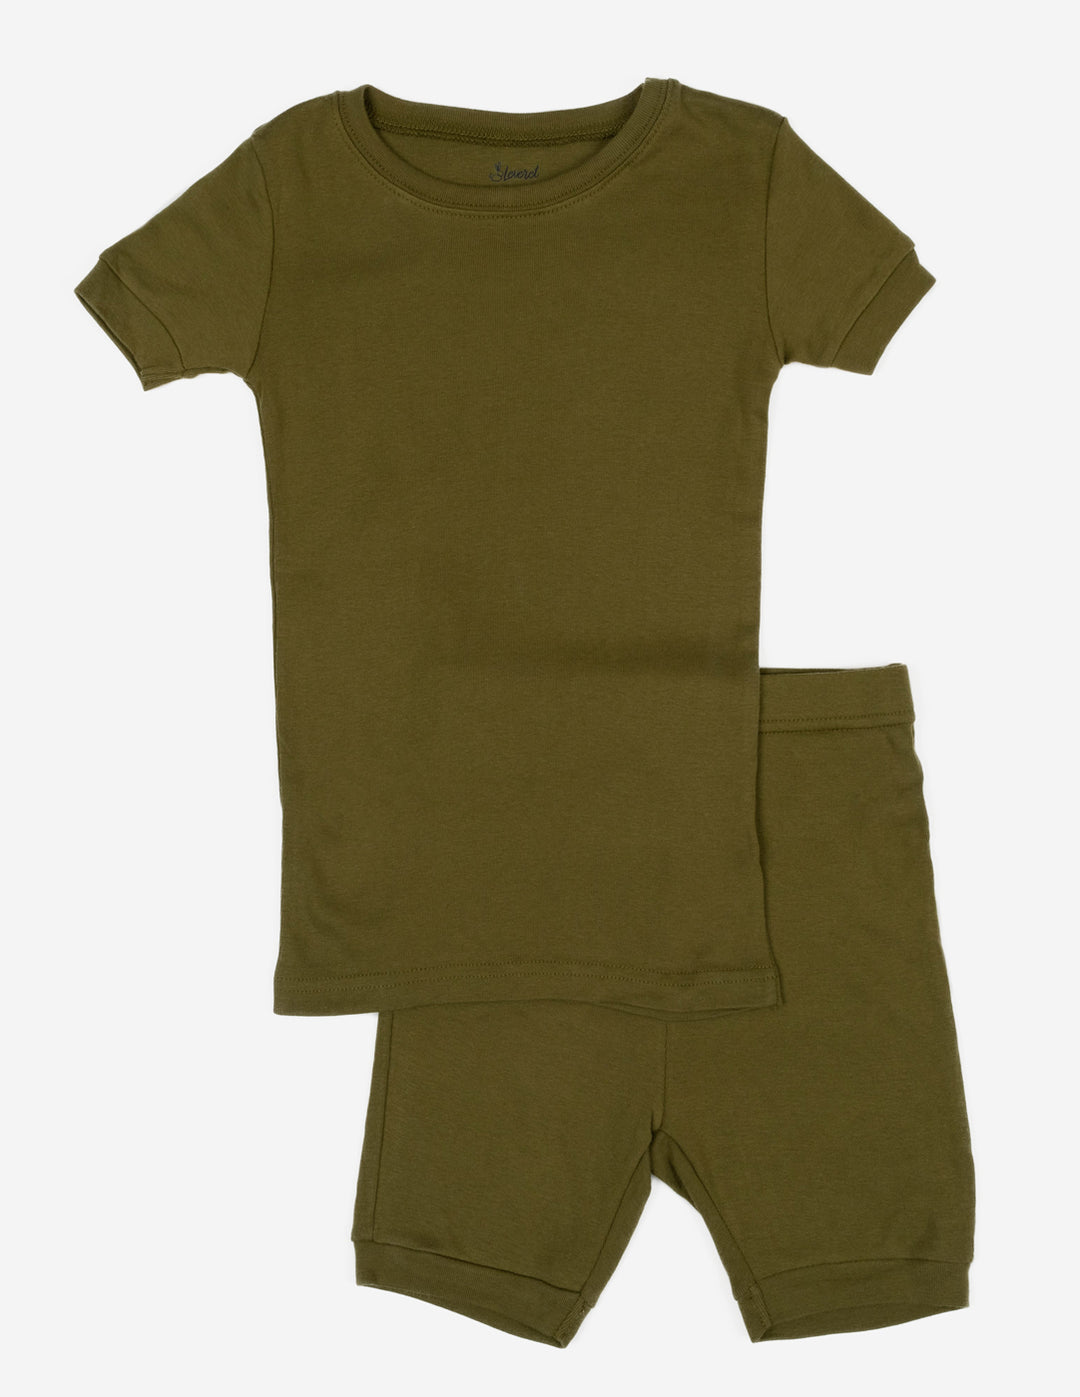 olive green solid color kids shorts pajamas